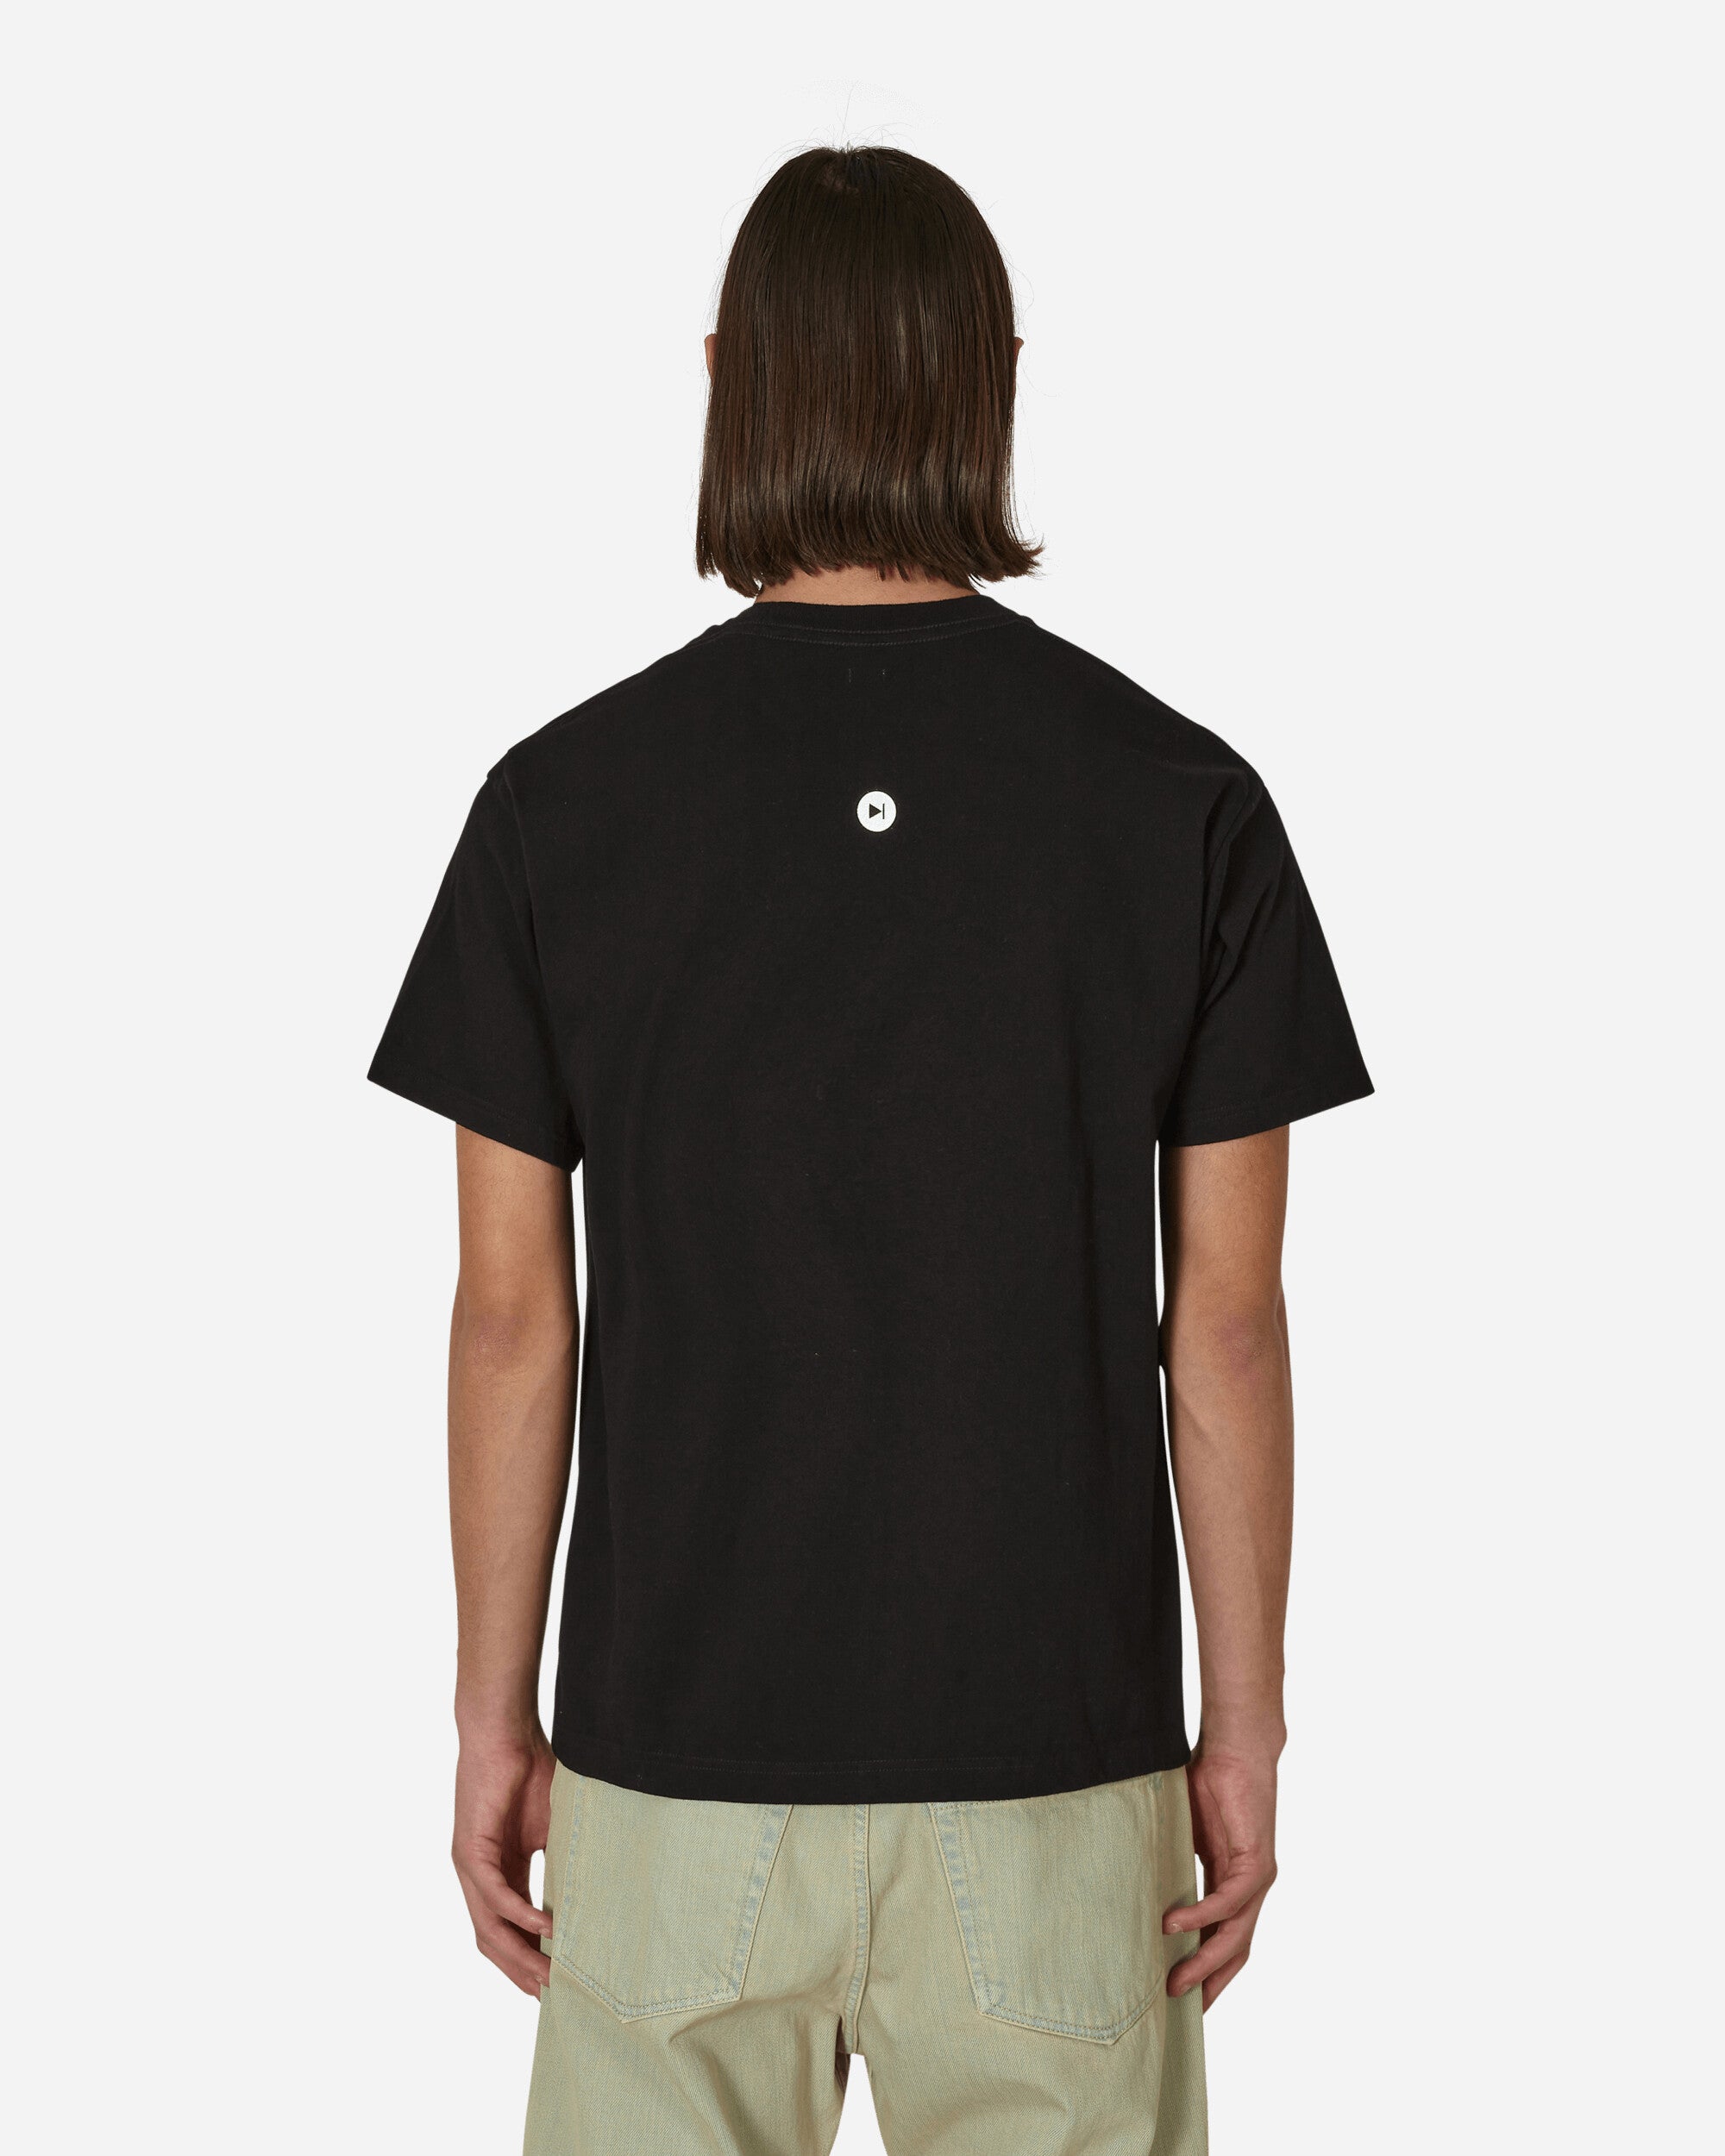 Sequel T-Shirt Black T-Shirts Shortsleeve SQ-22A W -ST-10  001